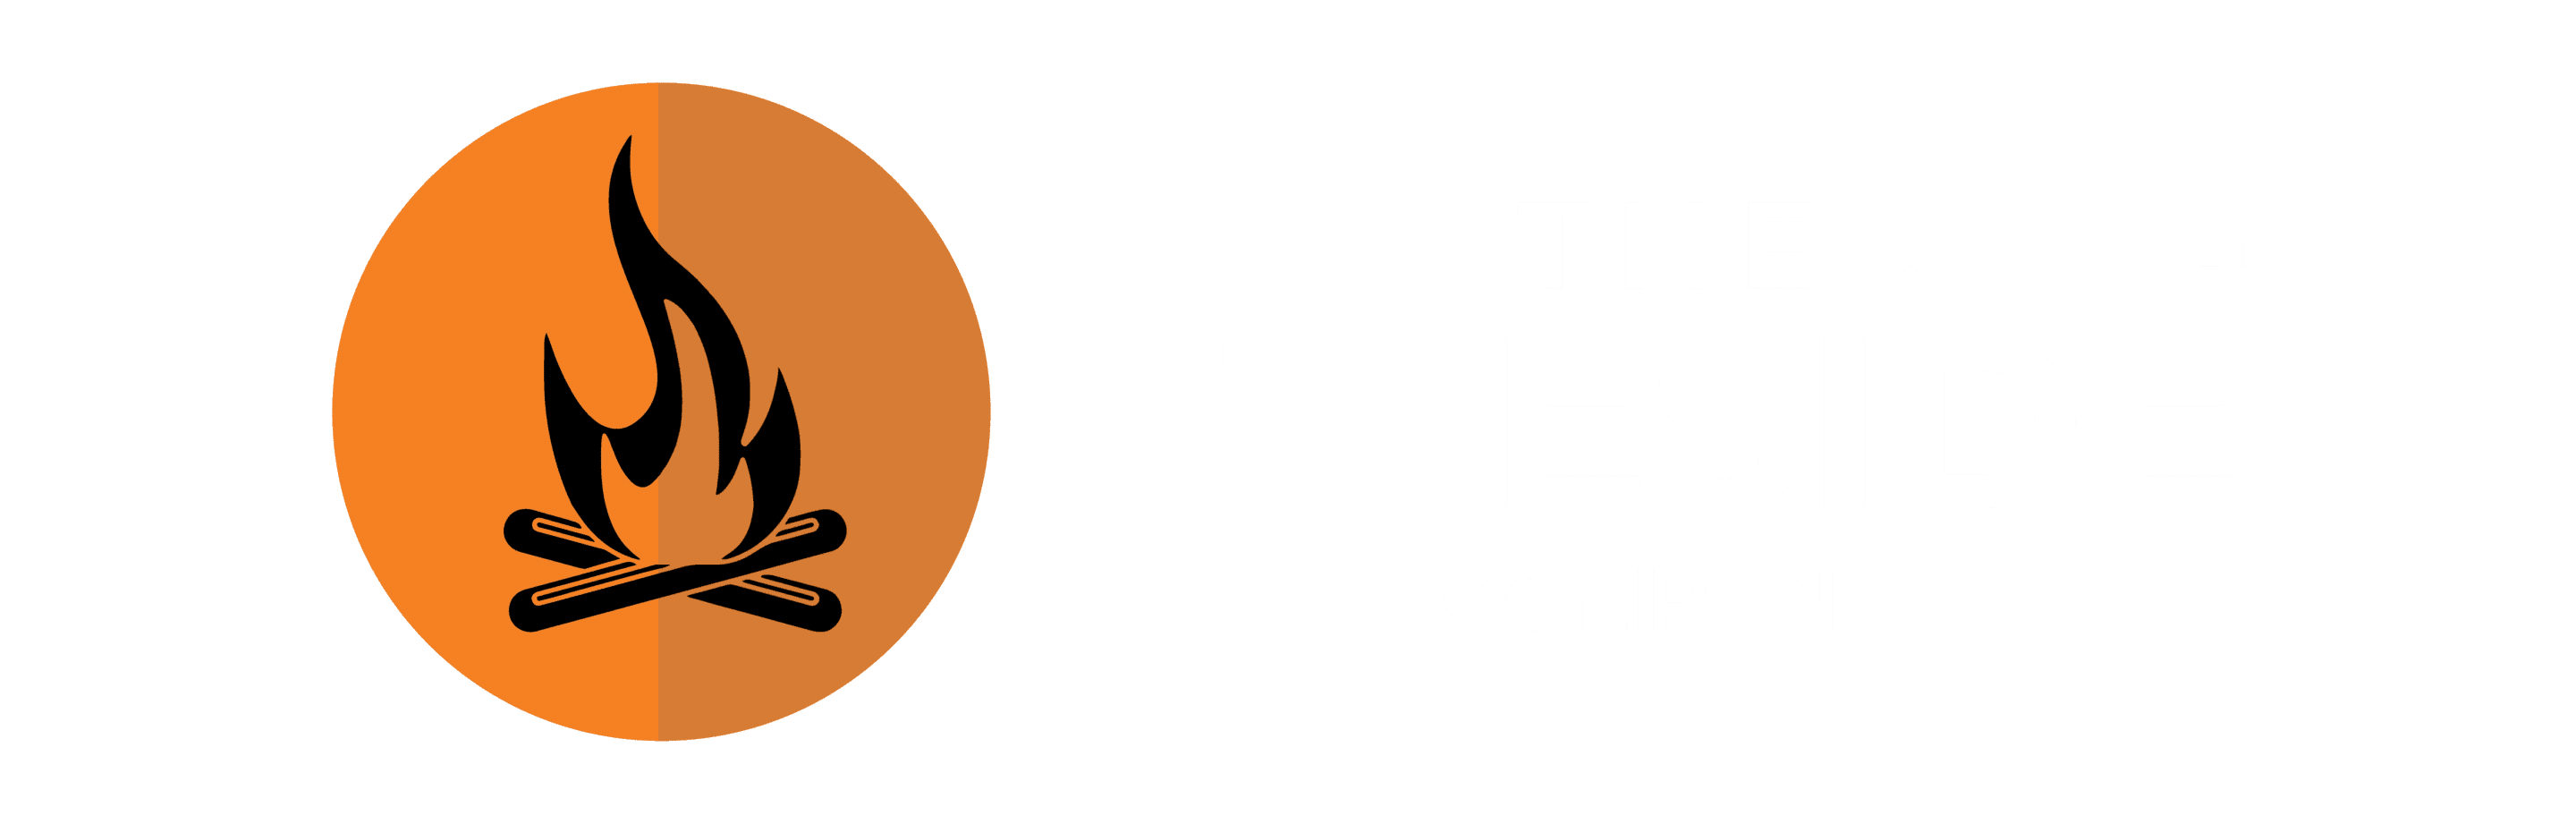 The Fireside Company